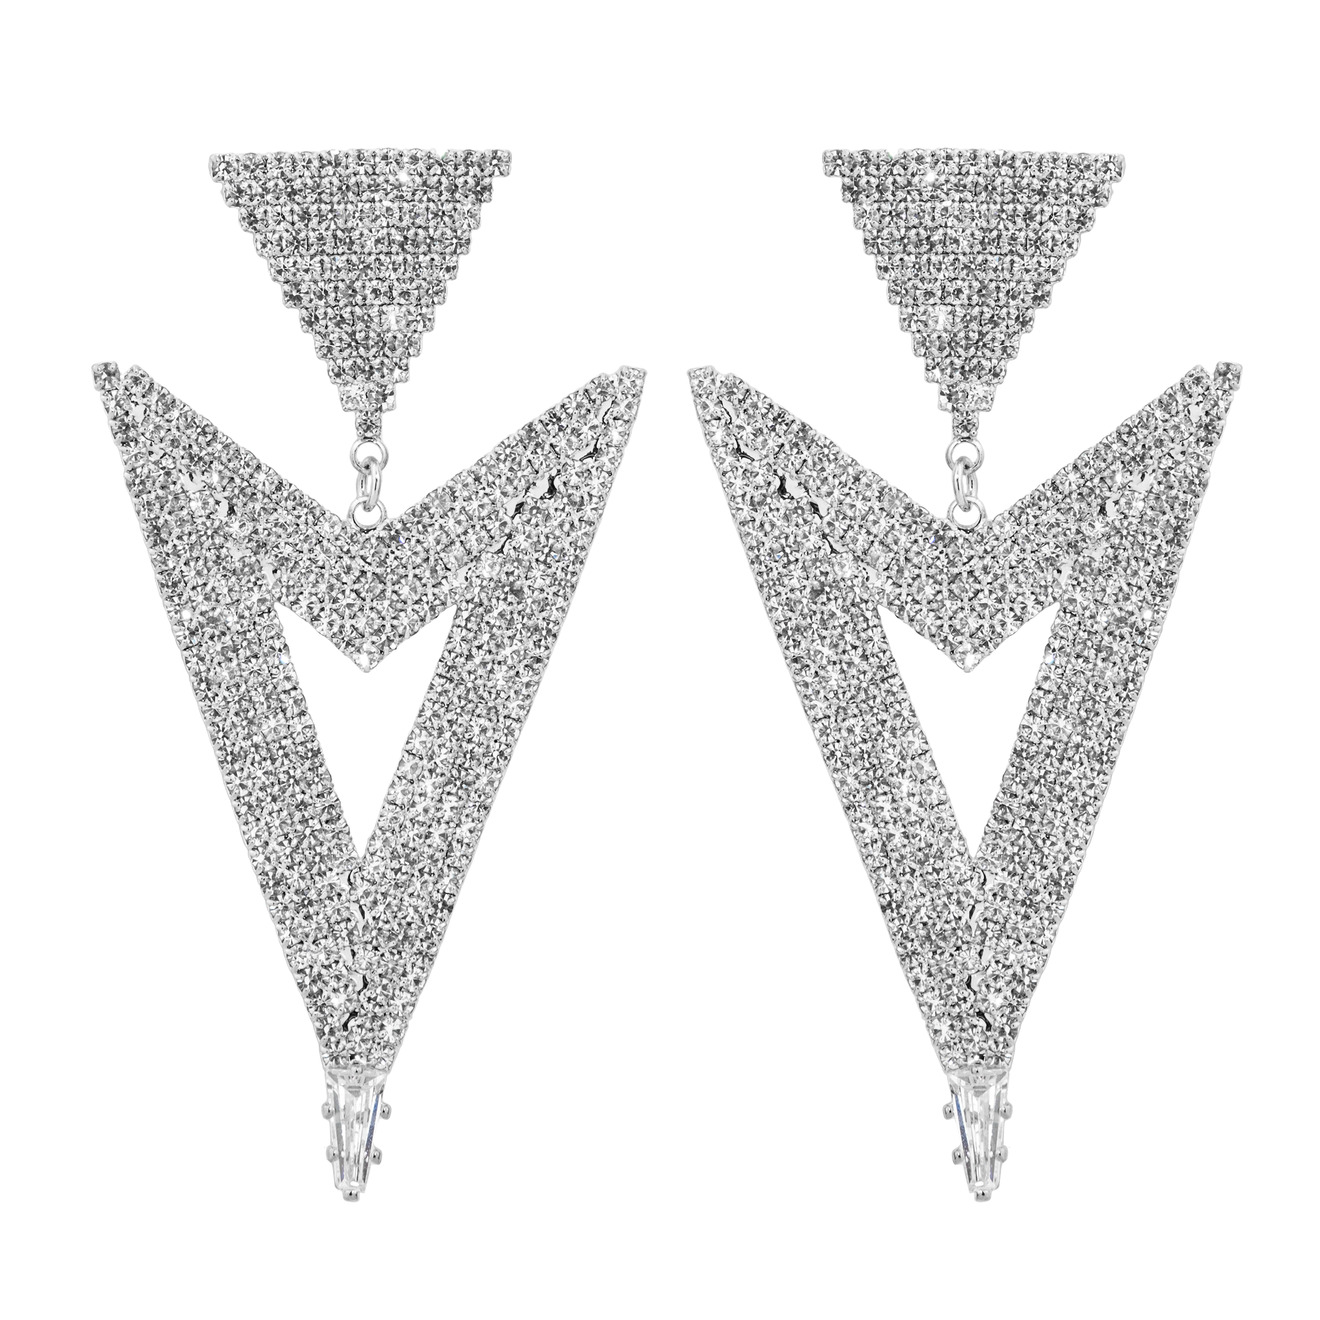 Herald Percy Серебристые серьги-стрелки с кристаллами herald percy серебристые серьги кольца с кристаллами